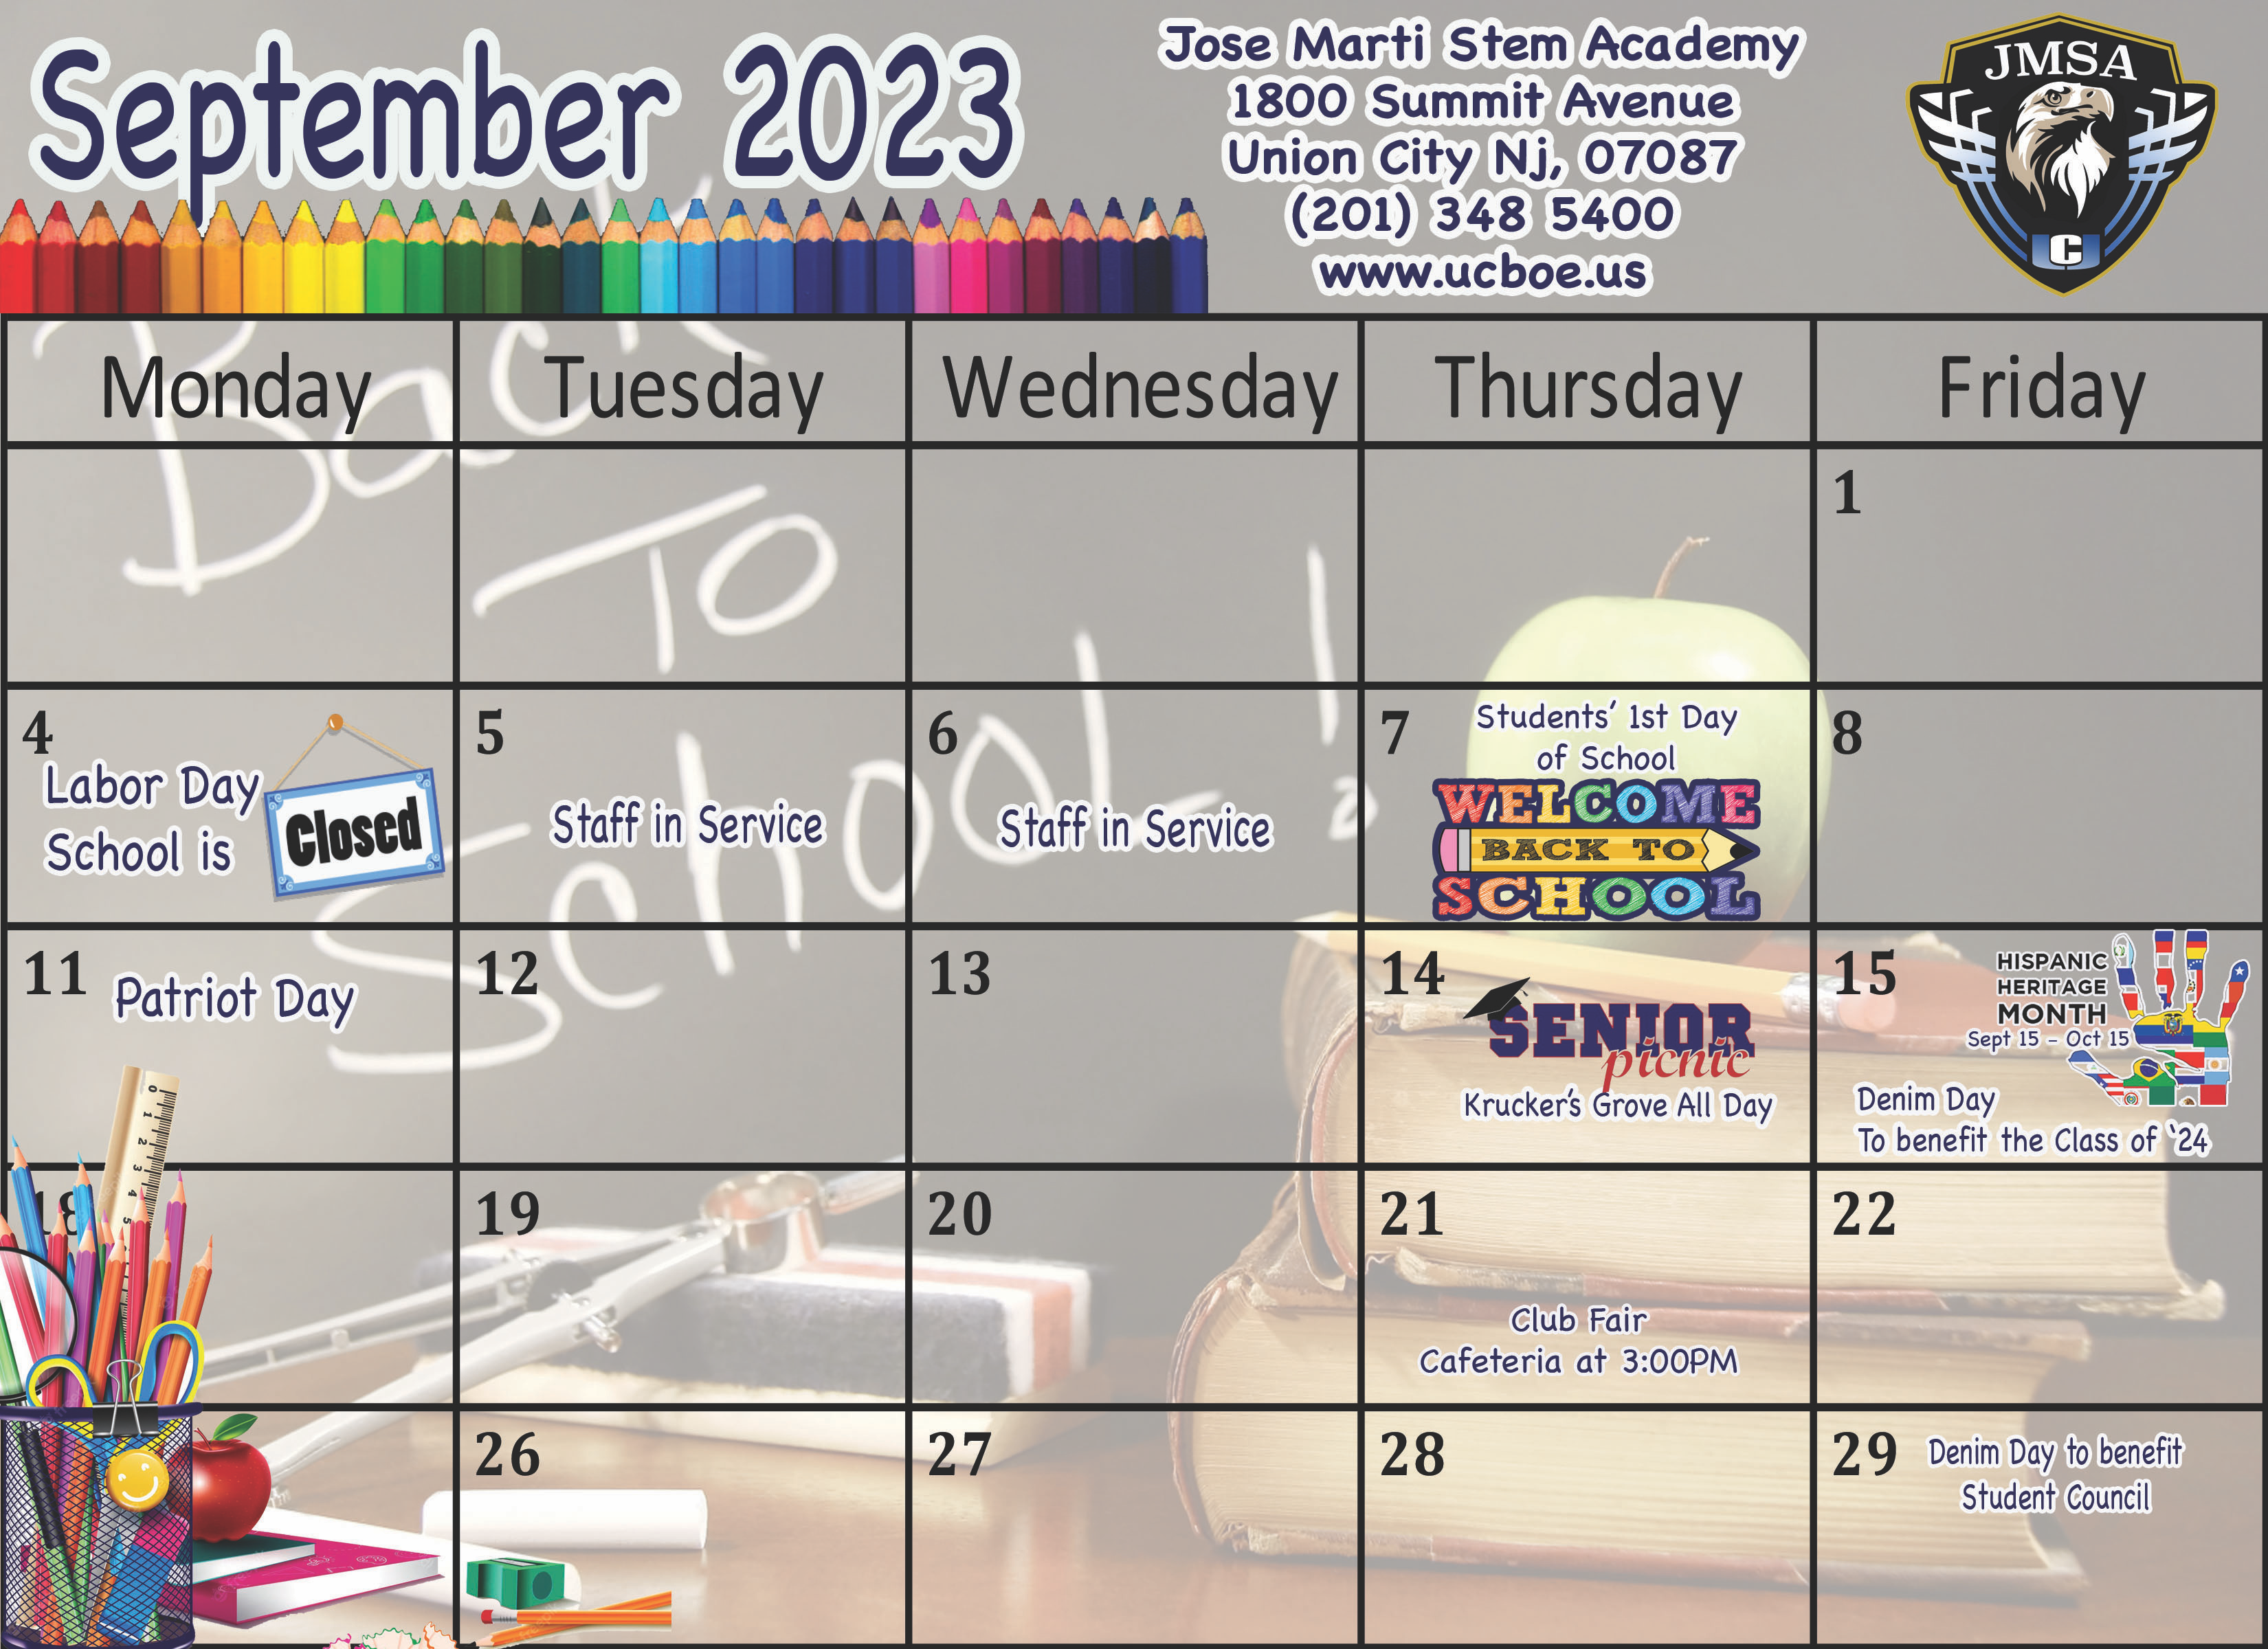 JMSA September 2023 Calendar